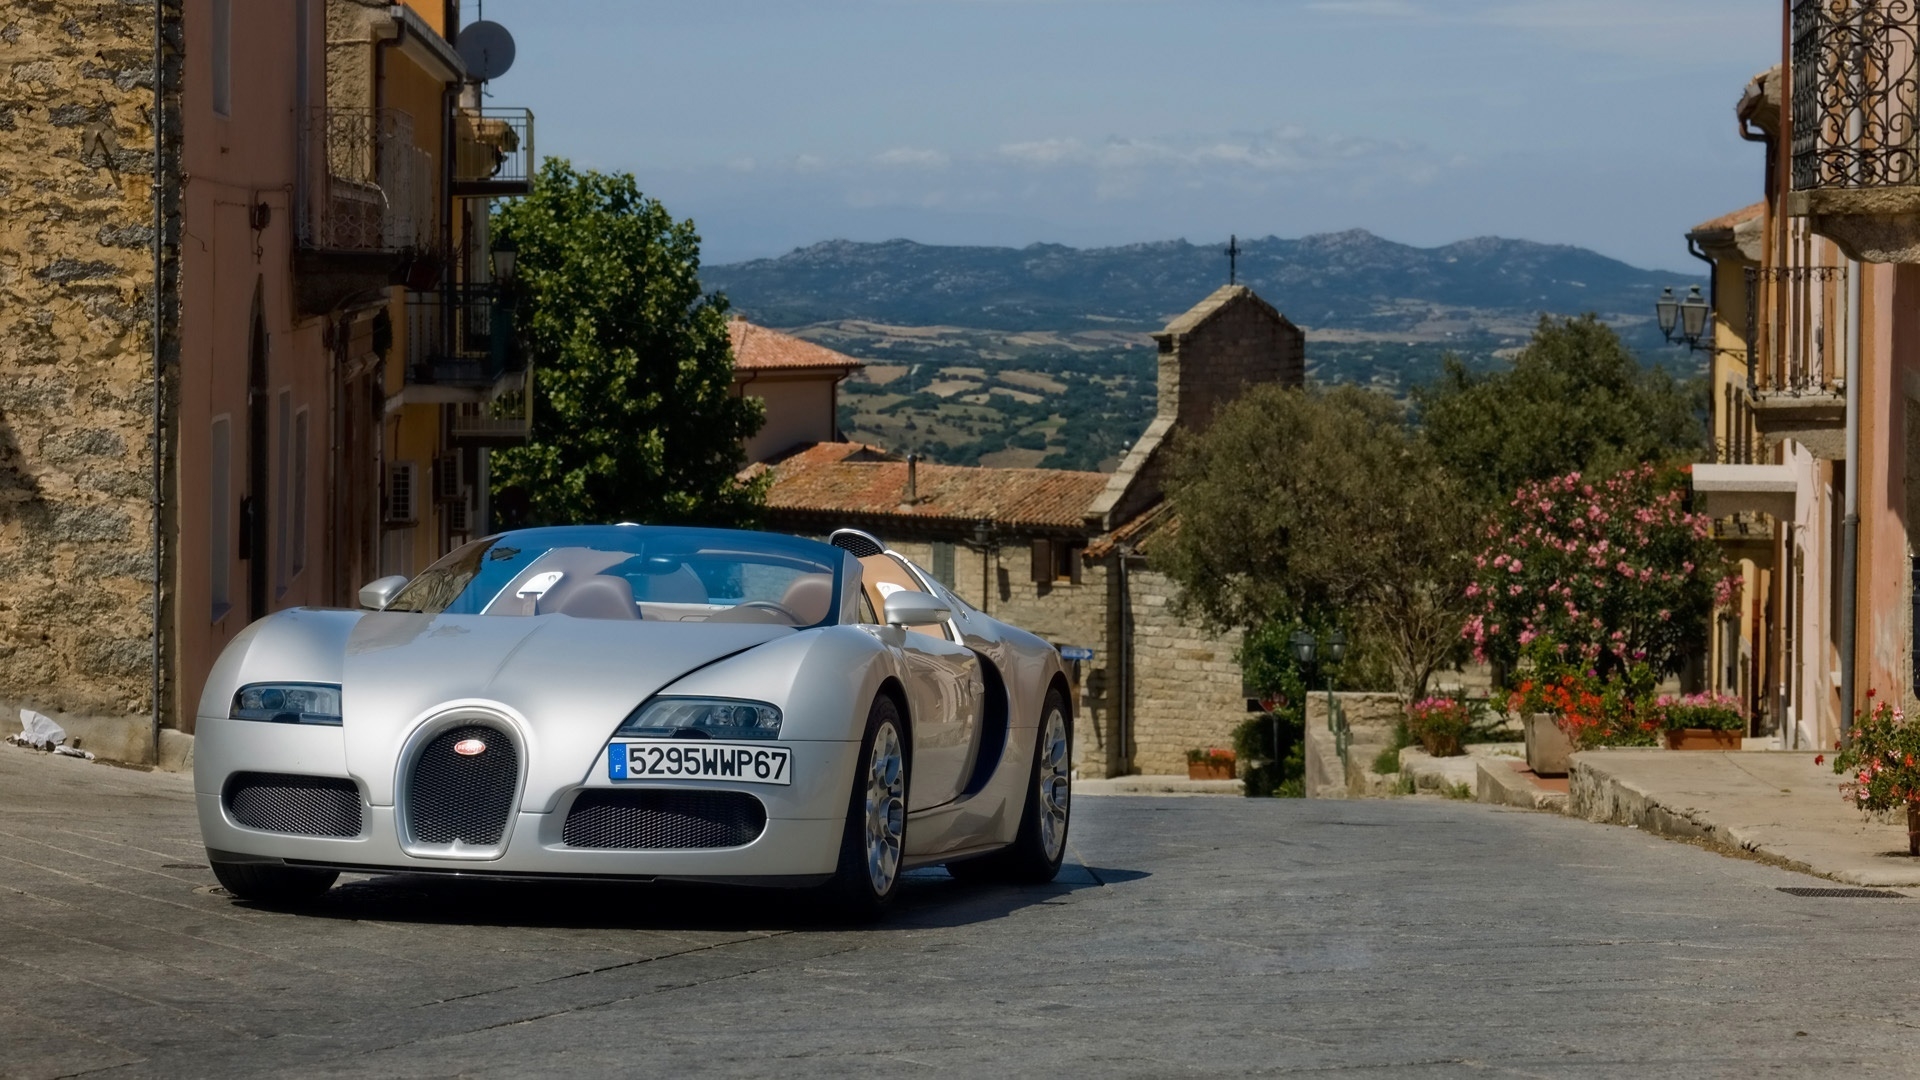 Bugatti Veyron 16.4 Grand Sport 2010 in Sardinia - Front Angle for 1920 x 1080 HDTV 1080p resolution